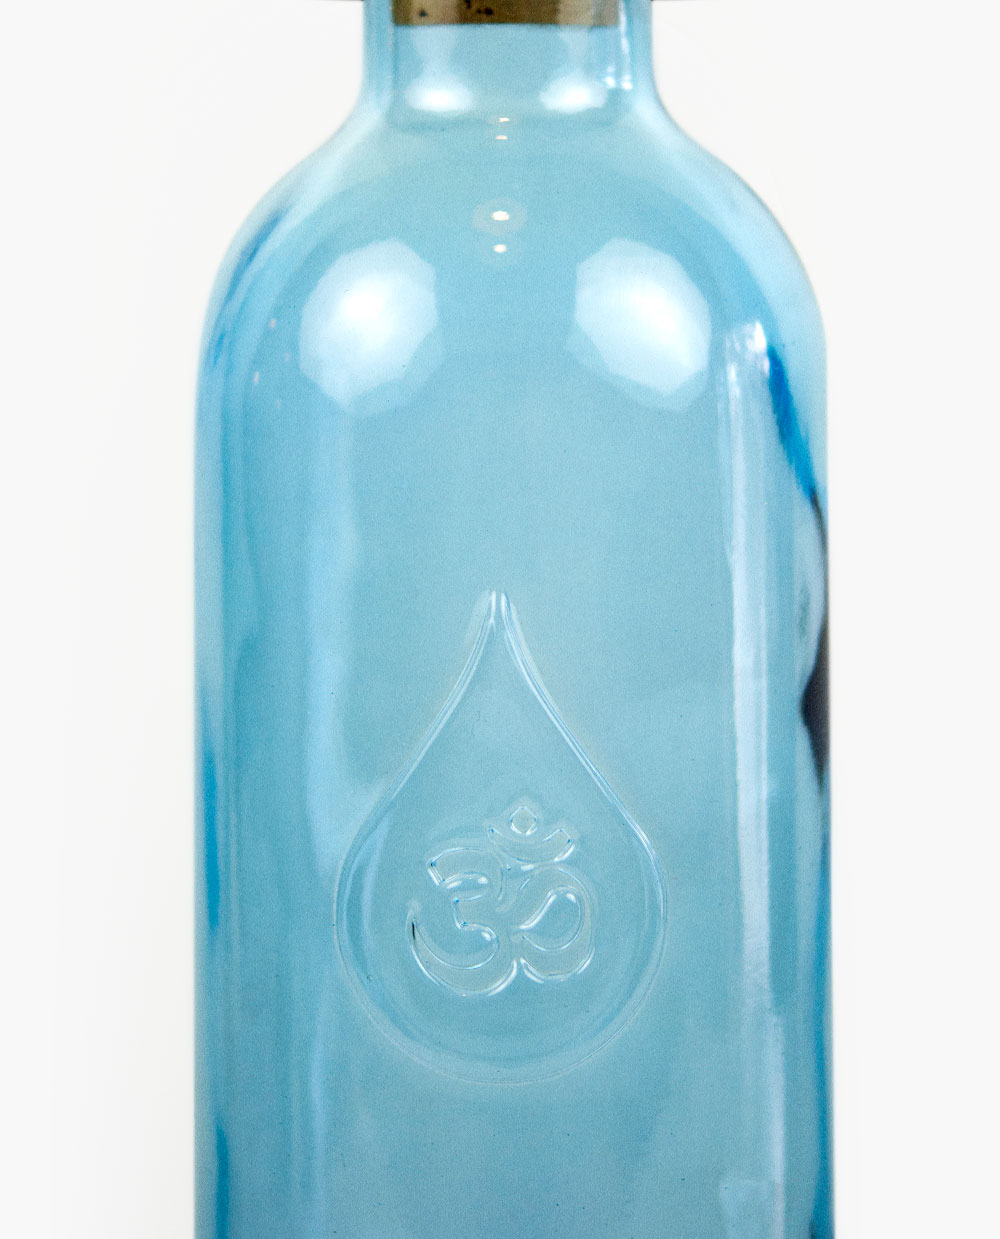 https://aumprana.com/wp-content/uploads/2020/11/Aumjoia-botella-vidrio-3.jpg